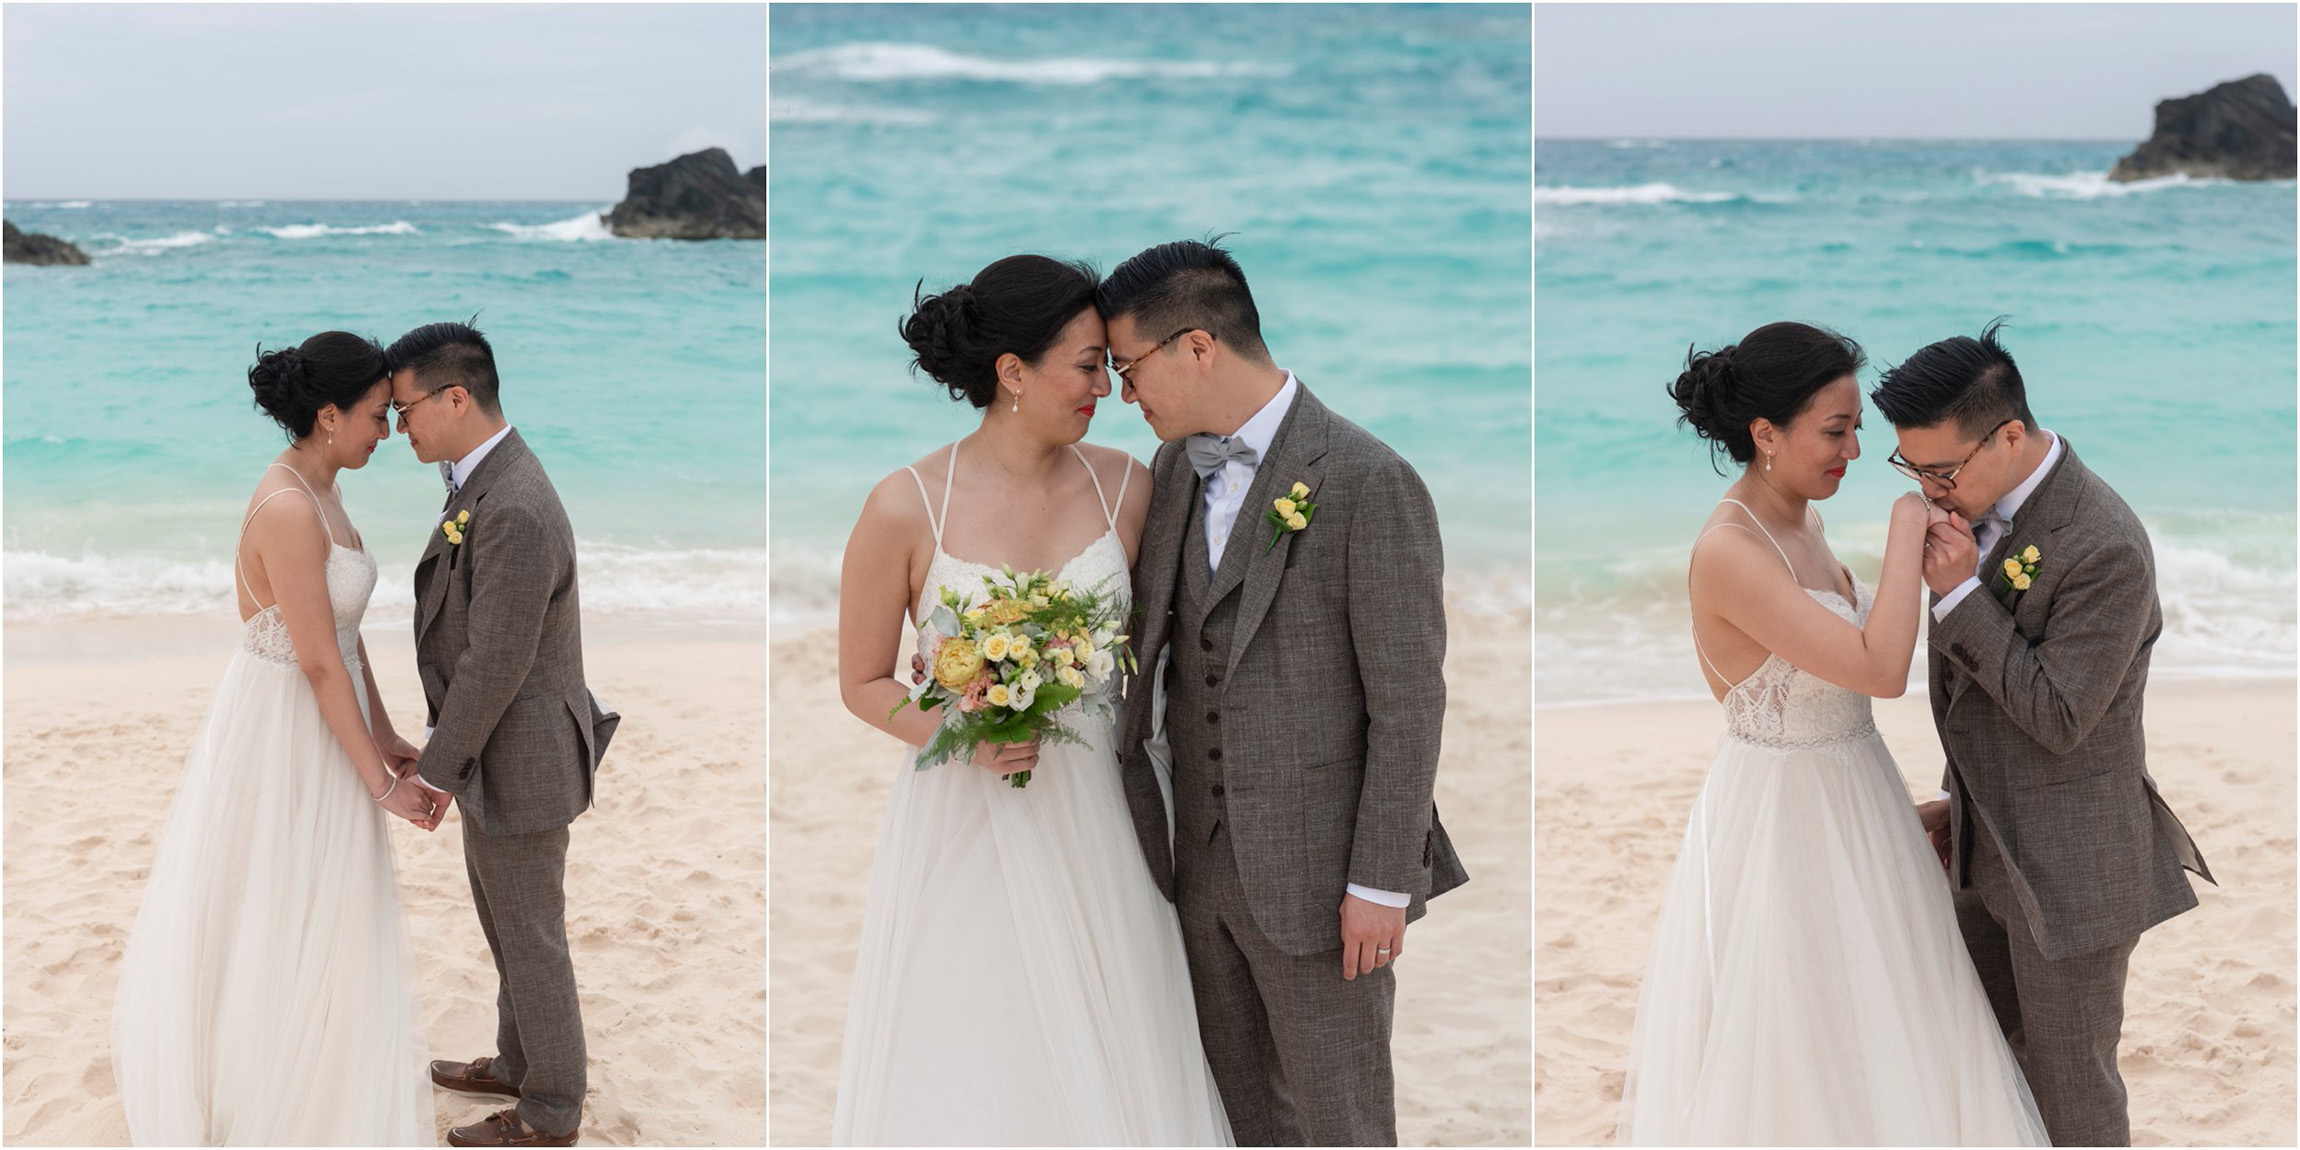 ©FianderFoto_Bermuda Wedding Photographer_Fairmont Southampton_Amy_Wilson_097.jpg